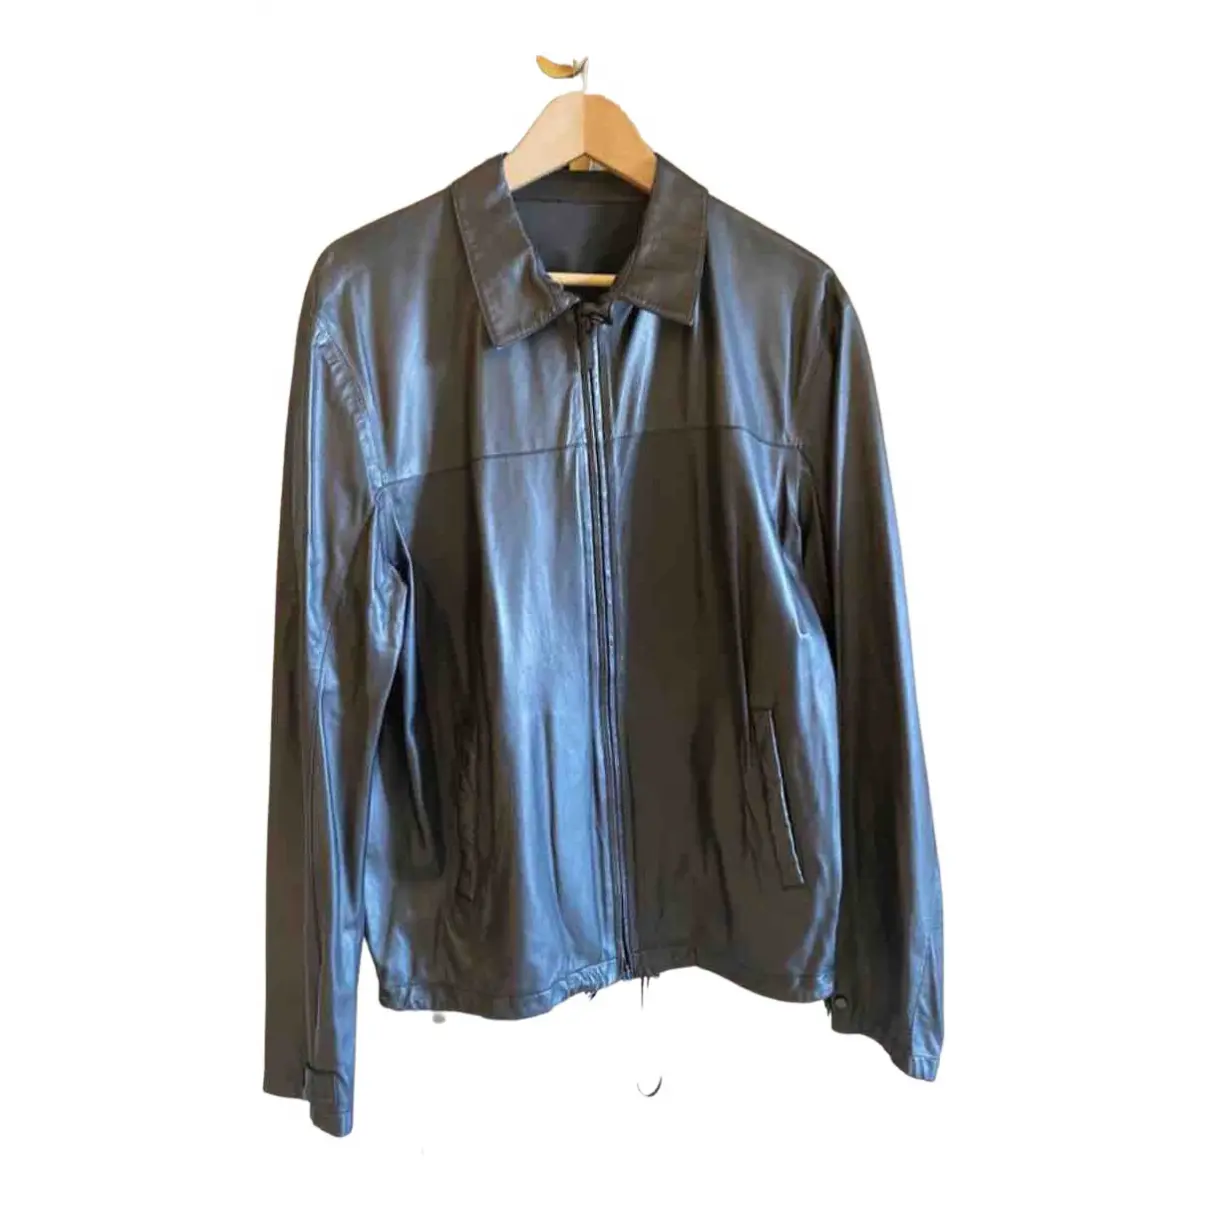 Leather jacket Emporio Armani